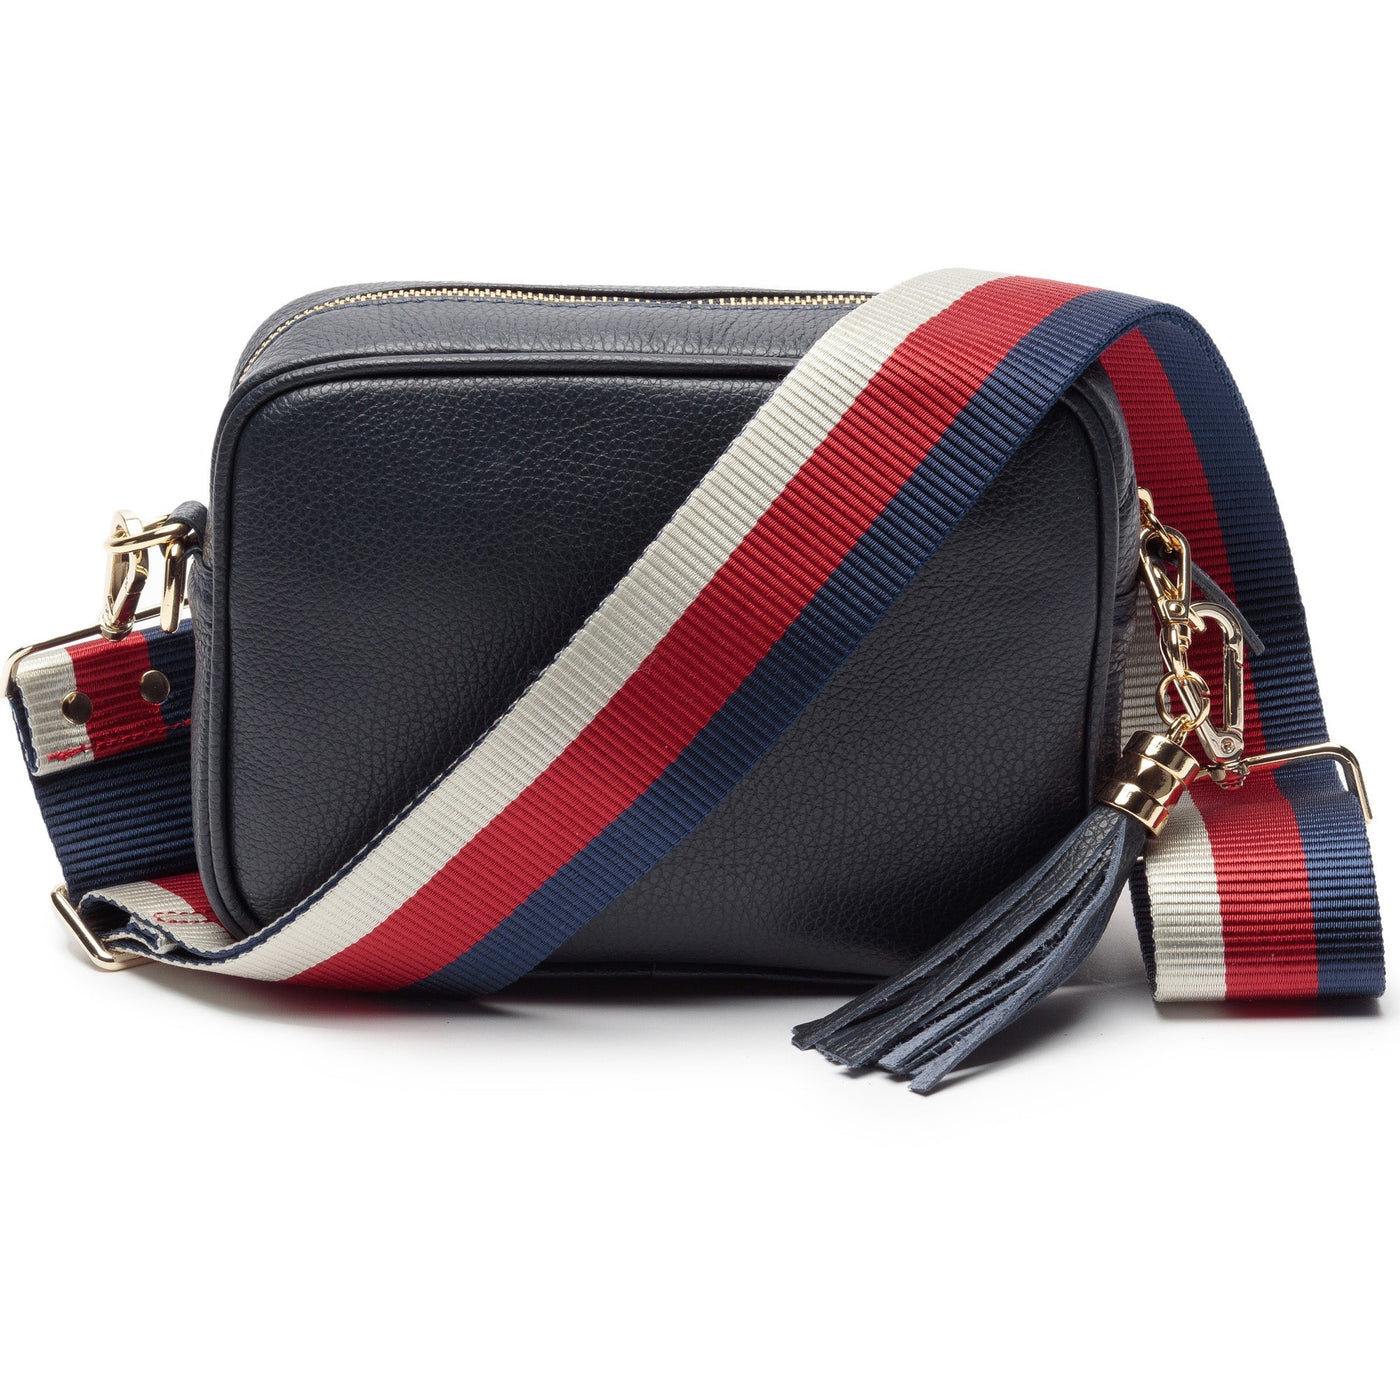 Elie Beaumont Designer Leather Crossbody Bag - Navy Blue (GOLD Fittings)